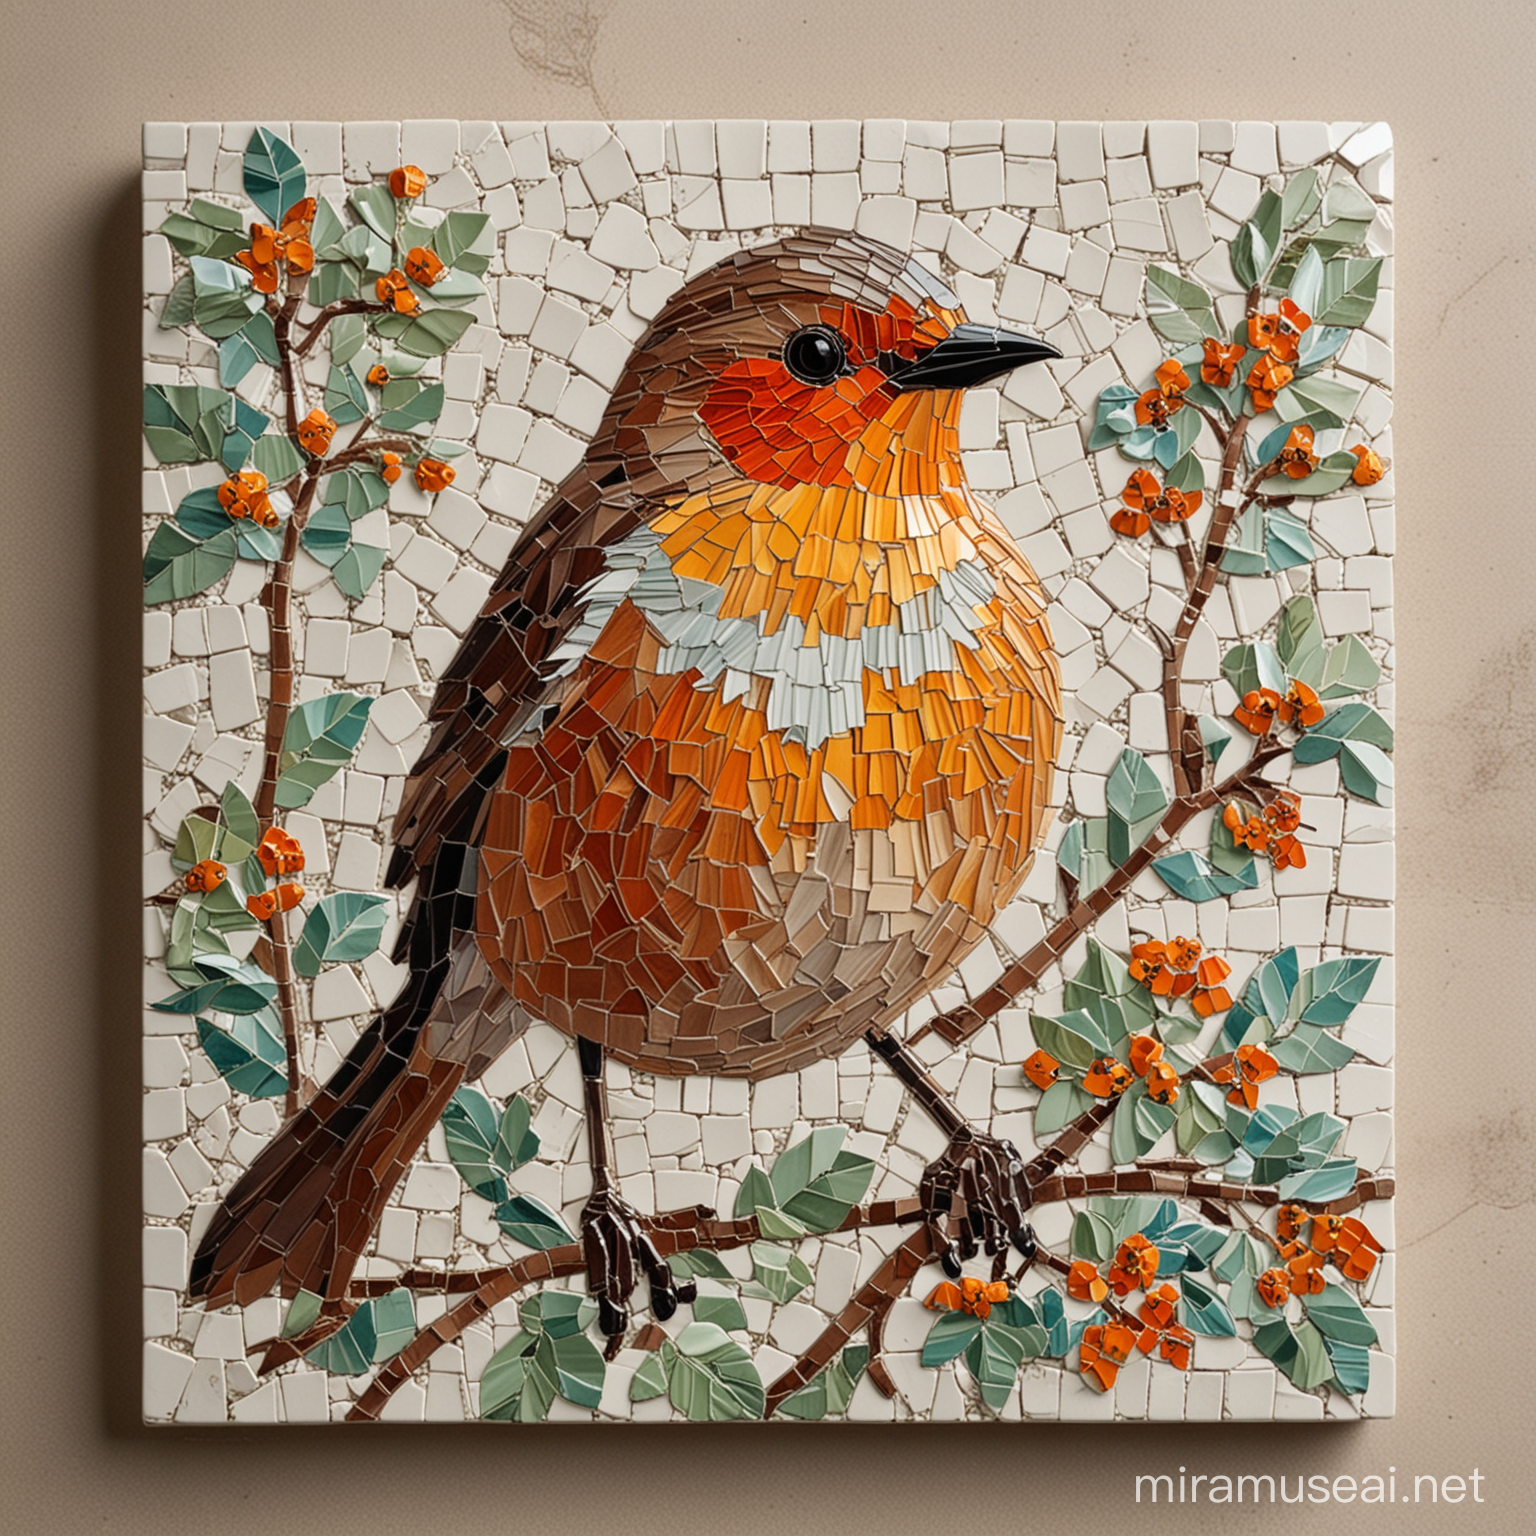 Colorful Robin Bird Tile Mosaic Artwork